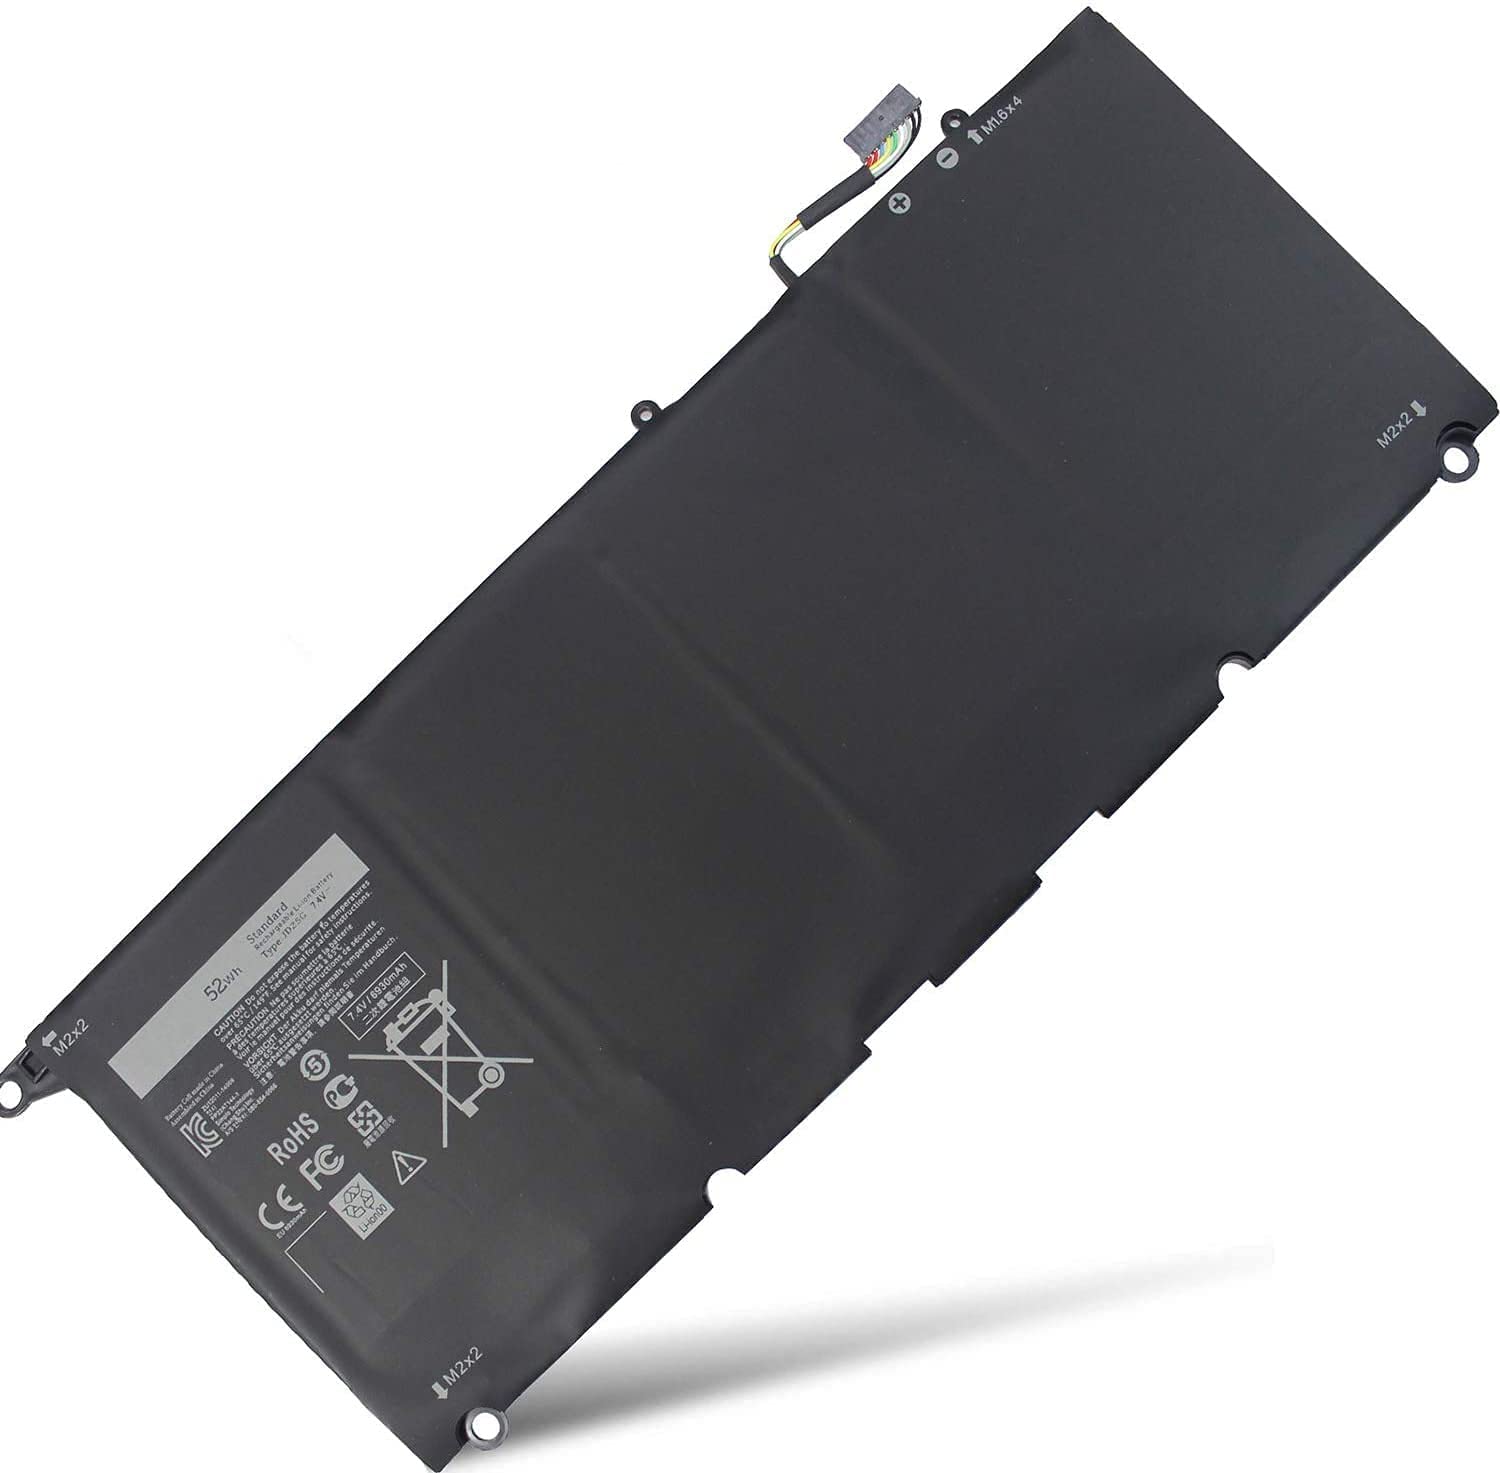 Dell JD25G laptop battery